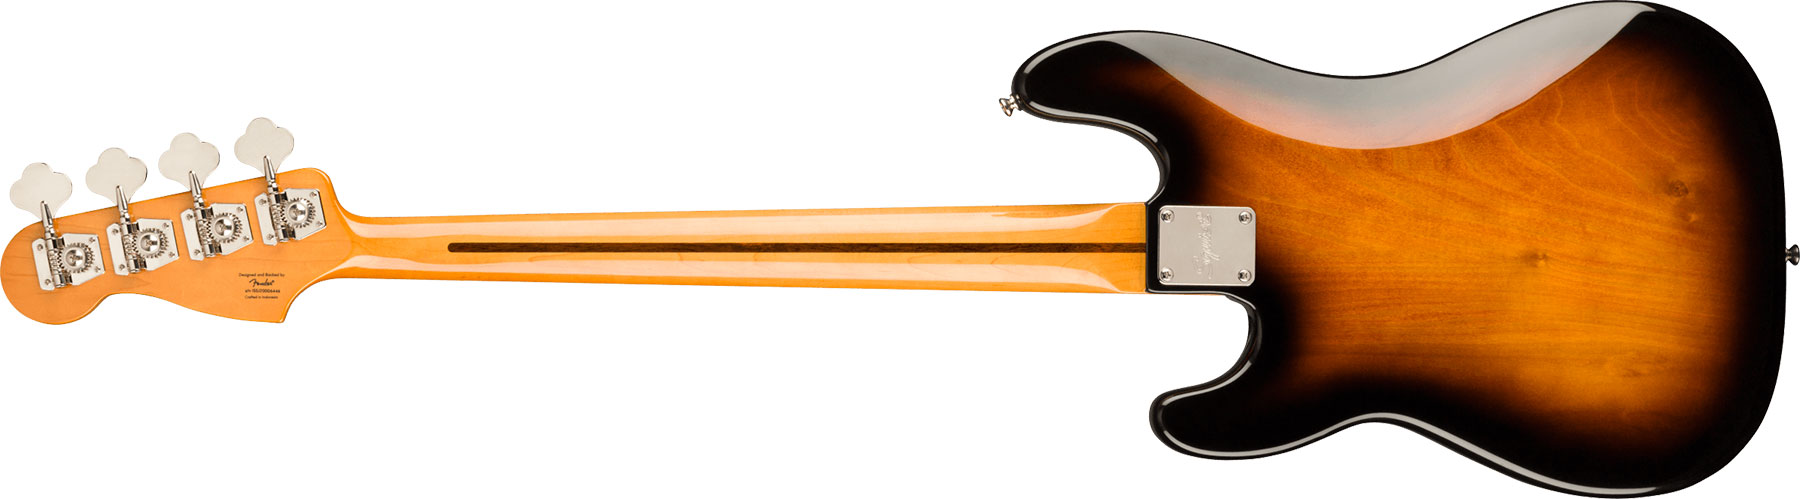 Squier Precision Bass Late '50s Classic Vibe Fsr Ltd Mn - 2-color Sunburst - Bajo eléctrico de cuerpo sólido - Variation 1